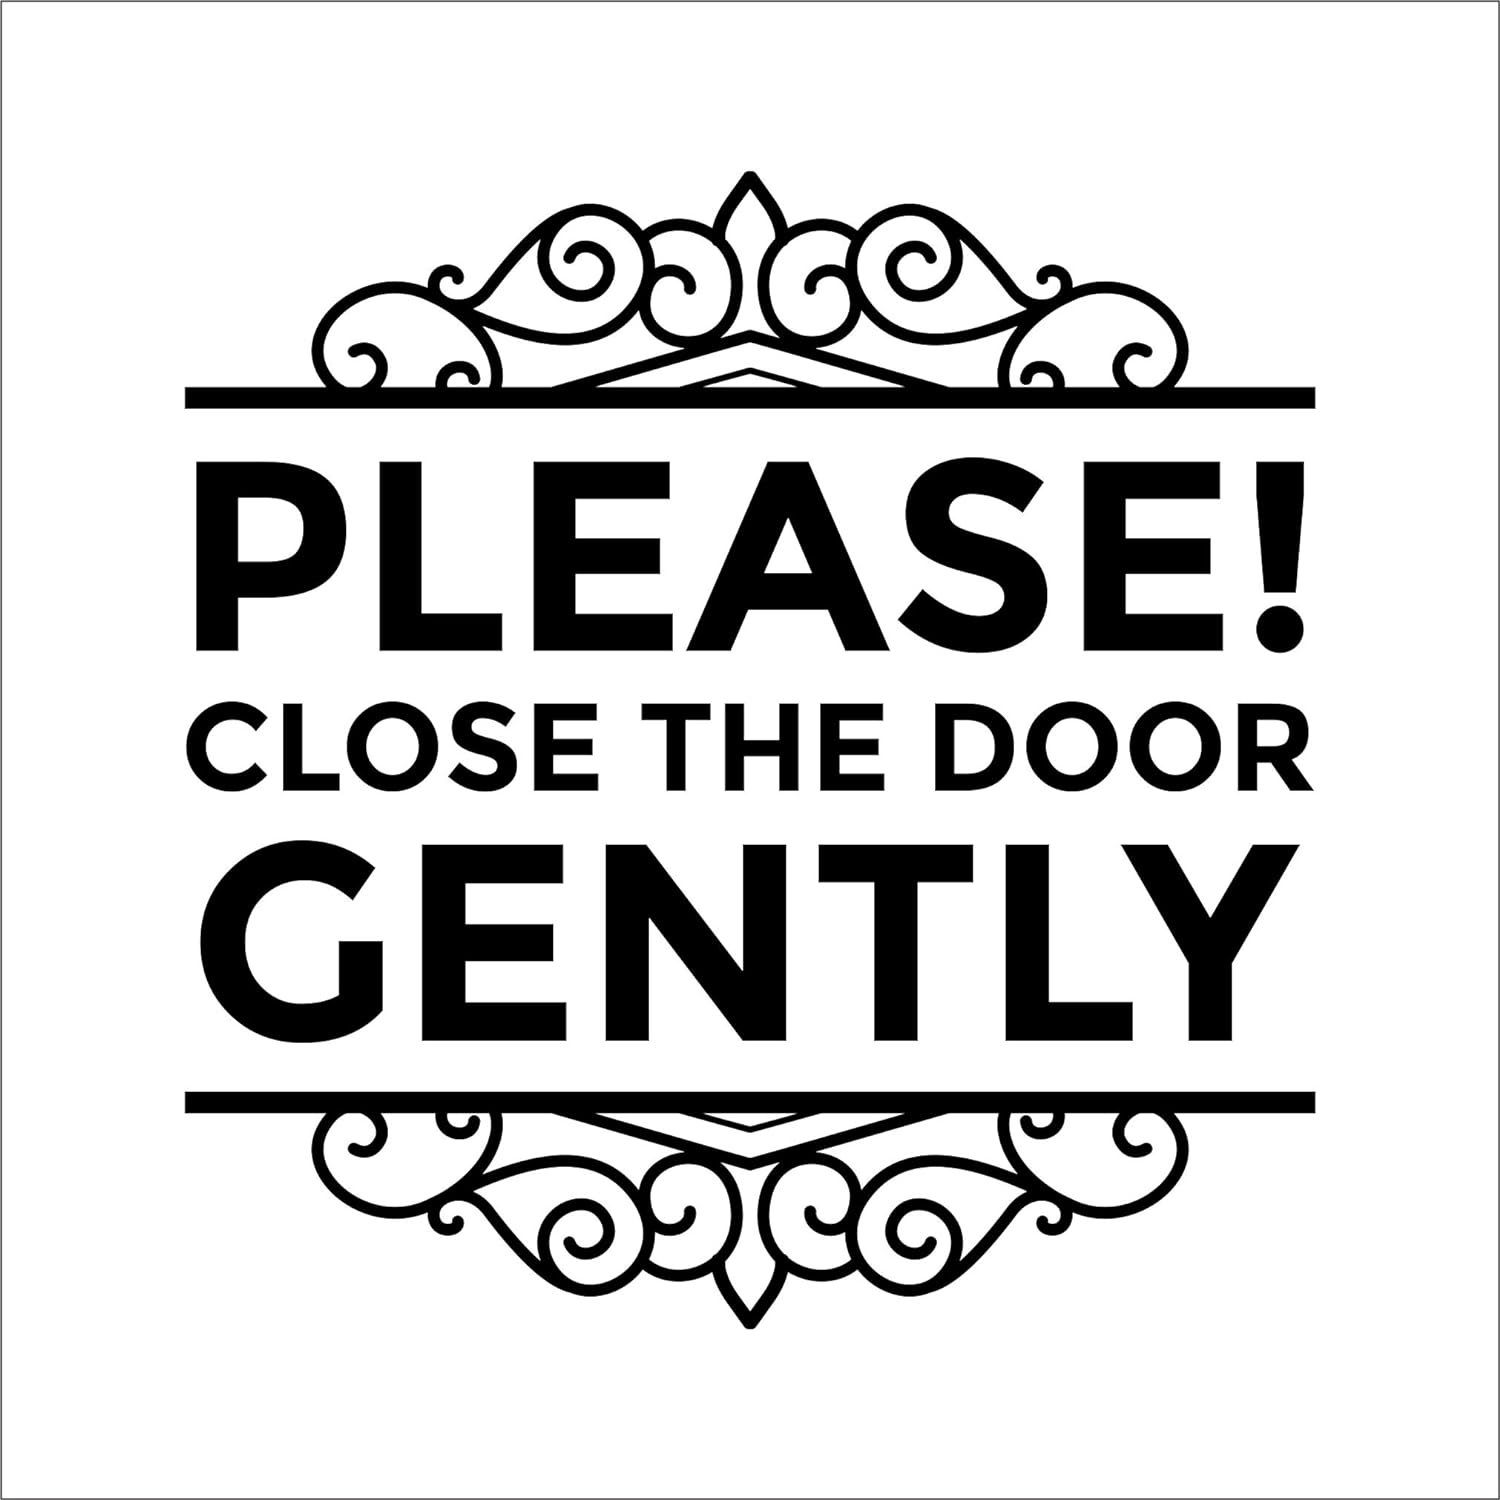 A gently closed door.